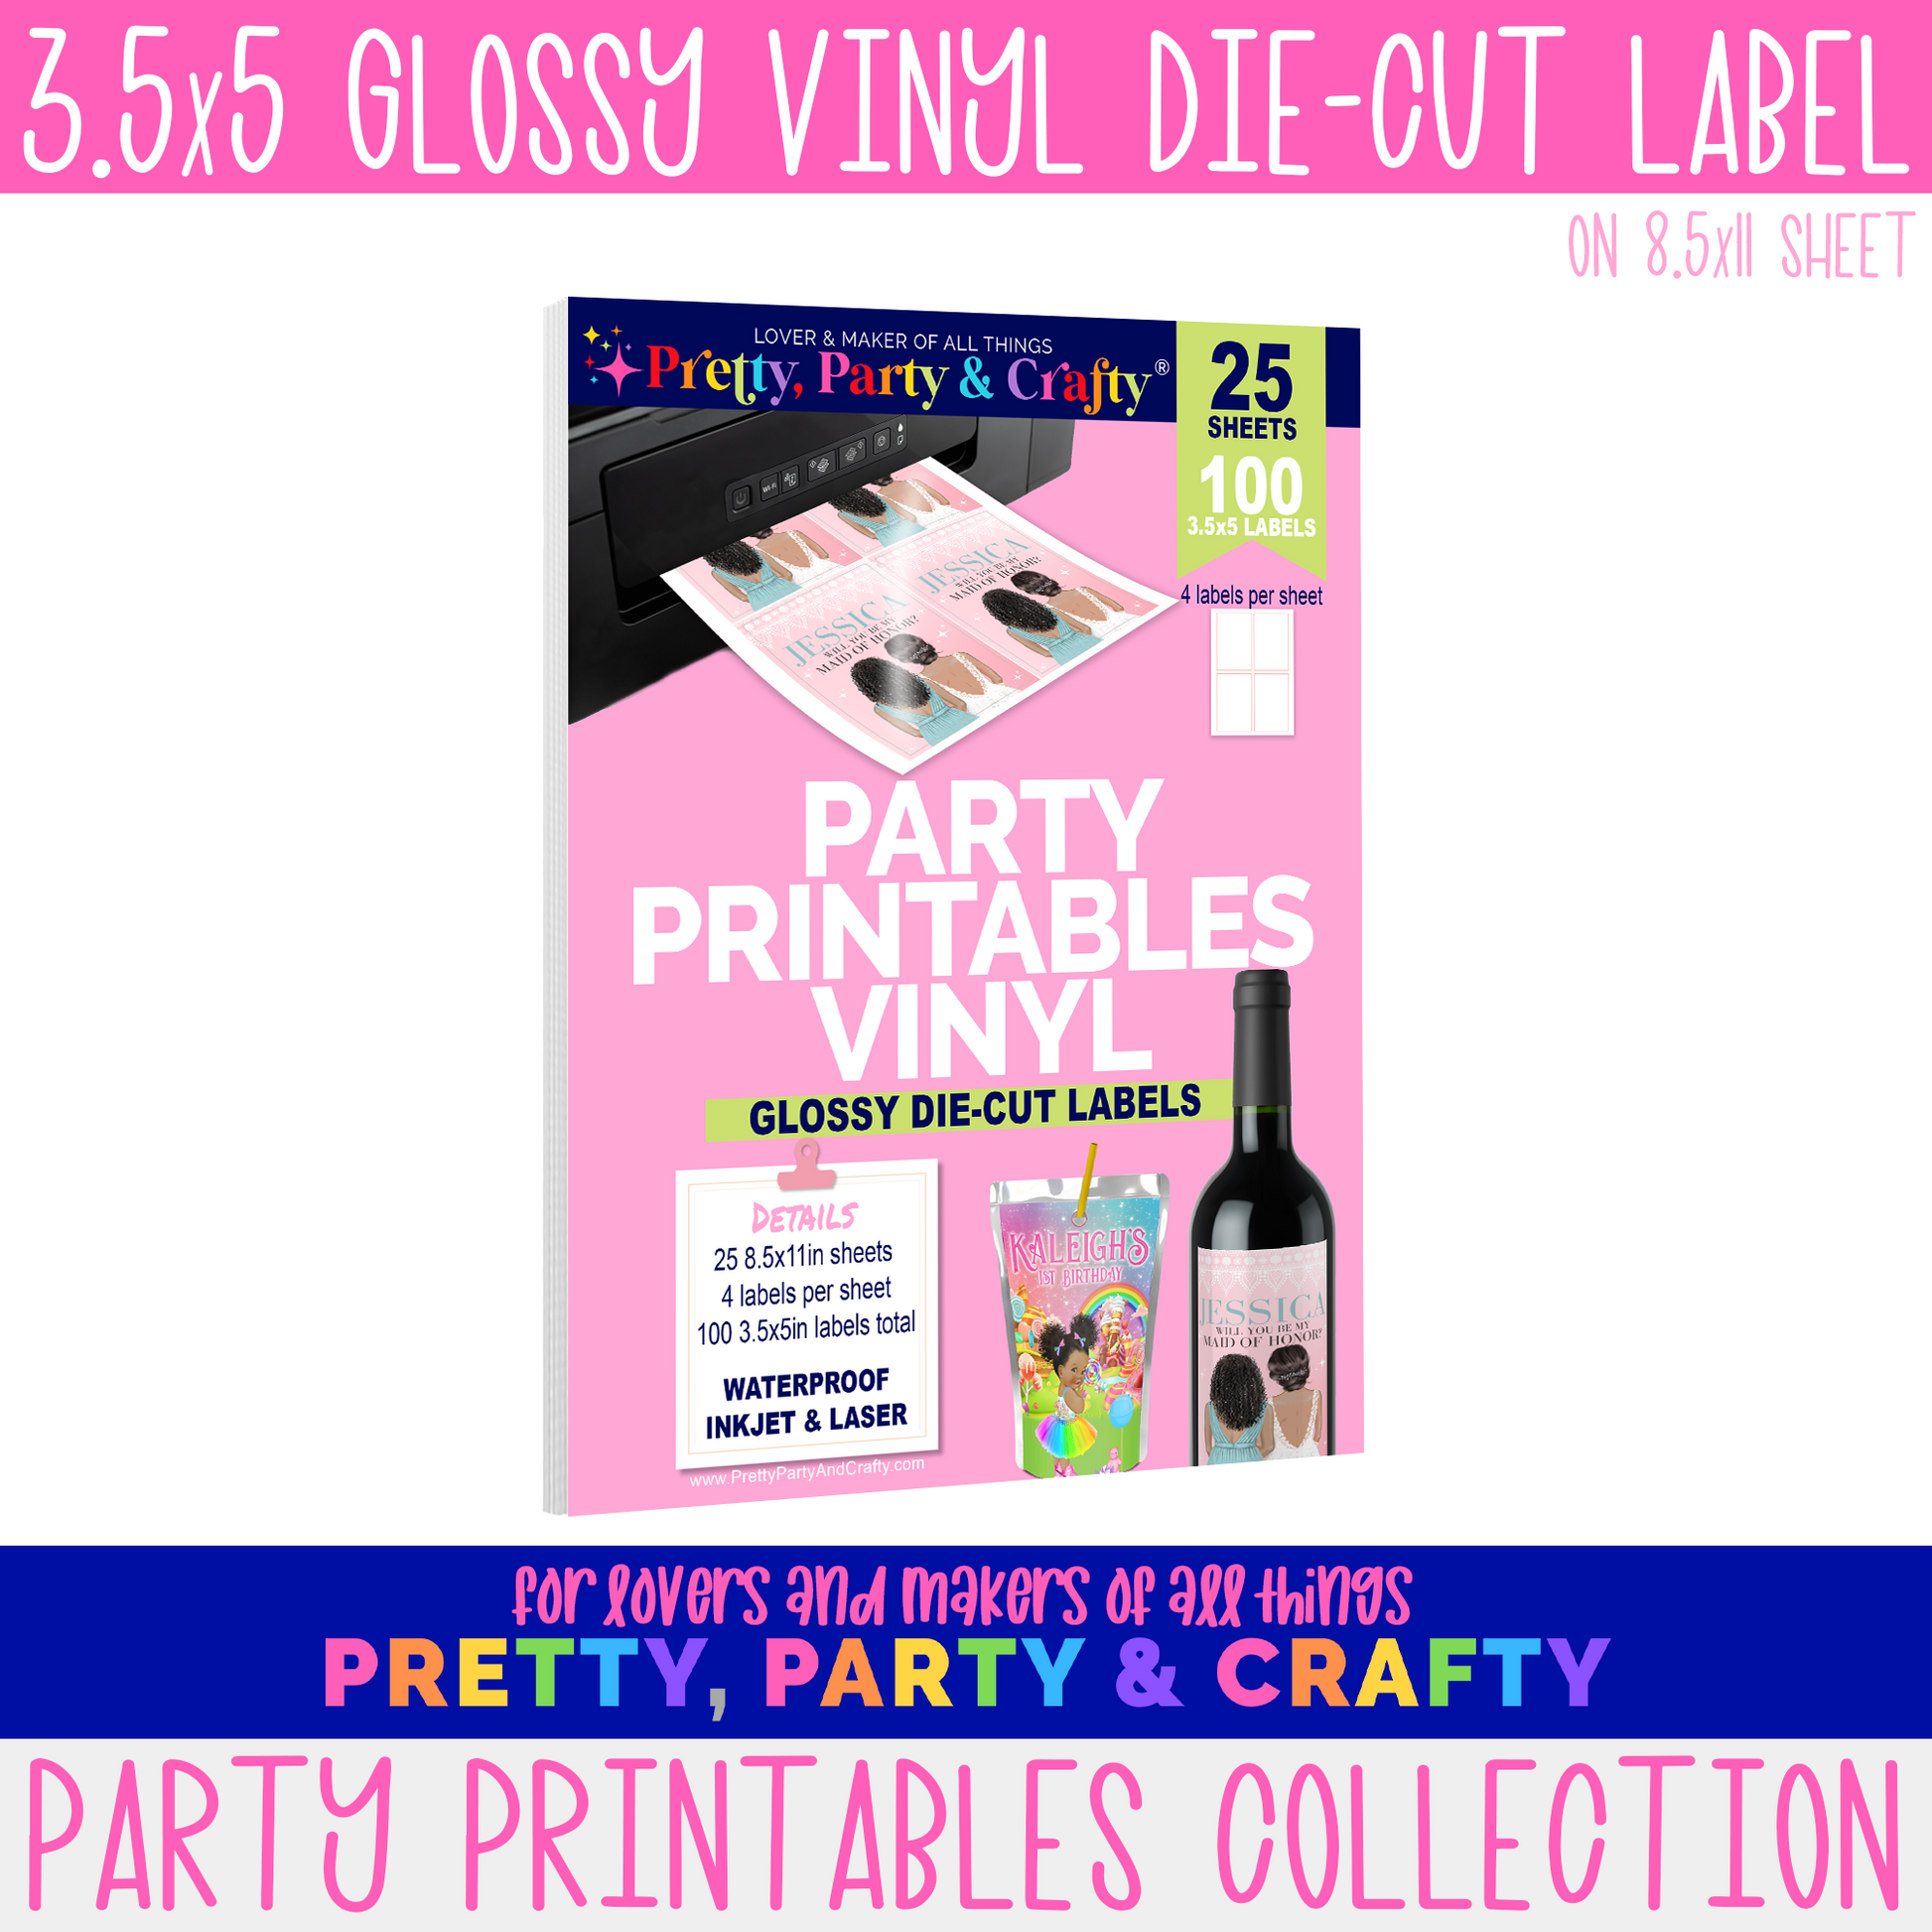 Printable Vinyl Sticker Paper Laser Glossy 100 sheets